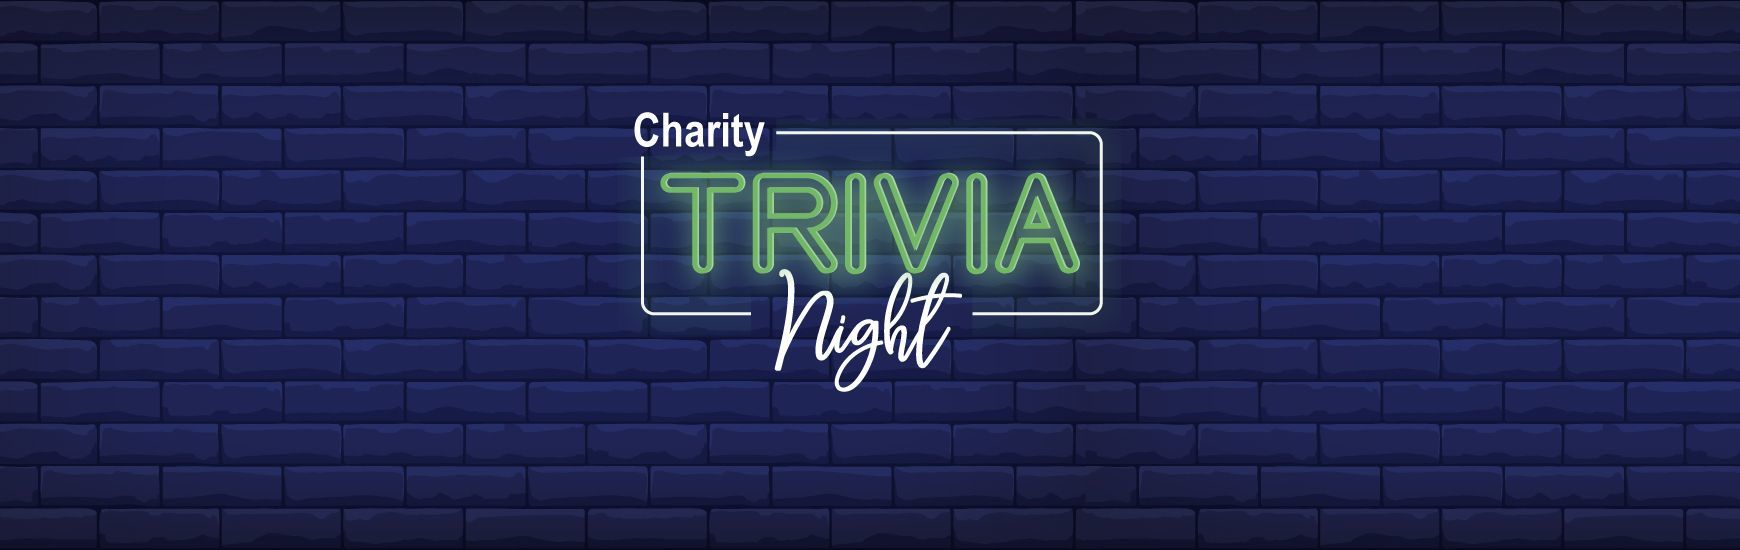 NGI Virtual Charity Trivia Night